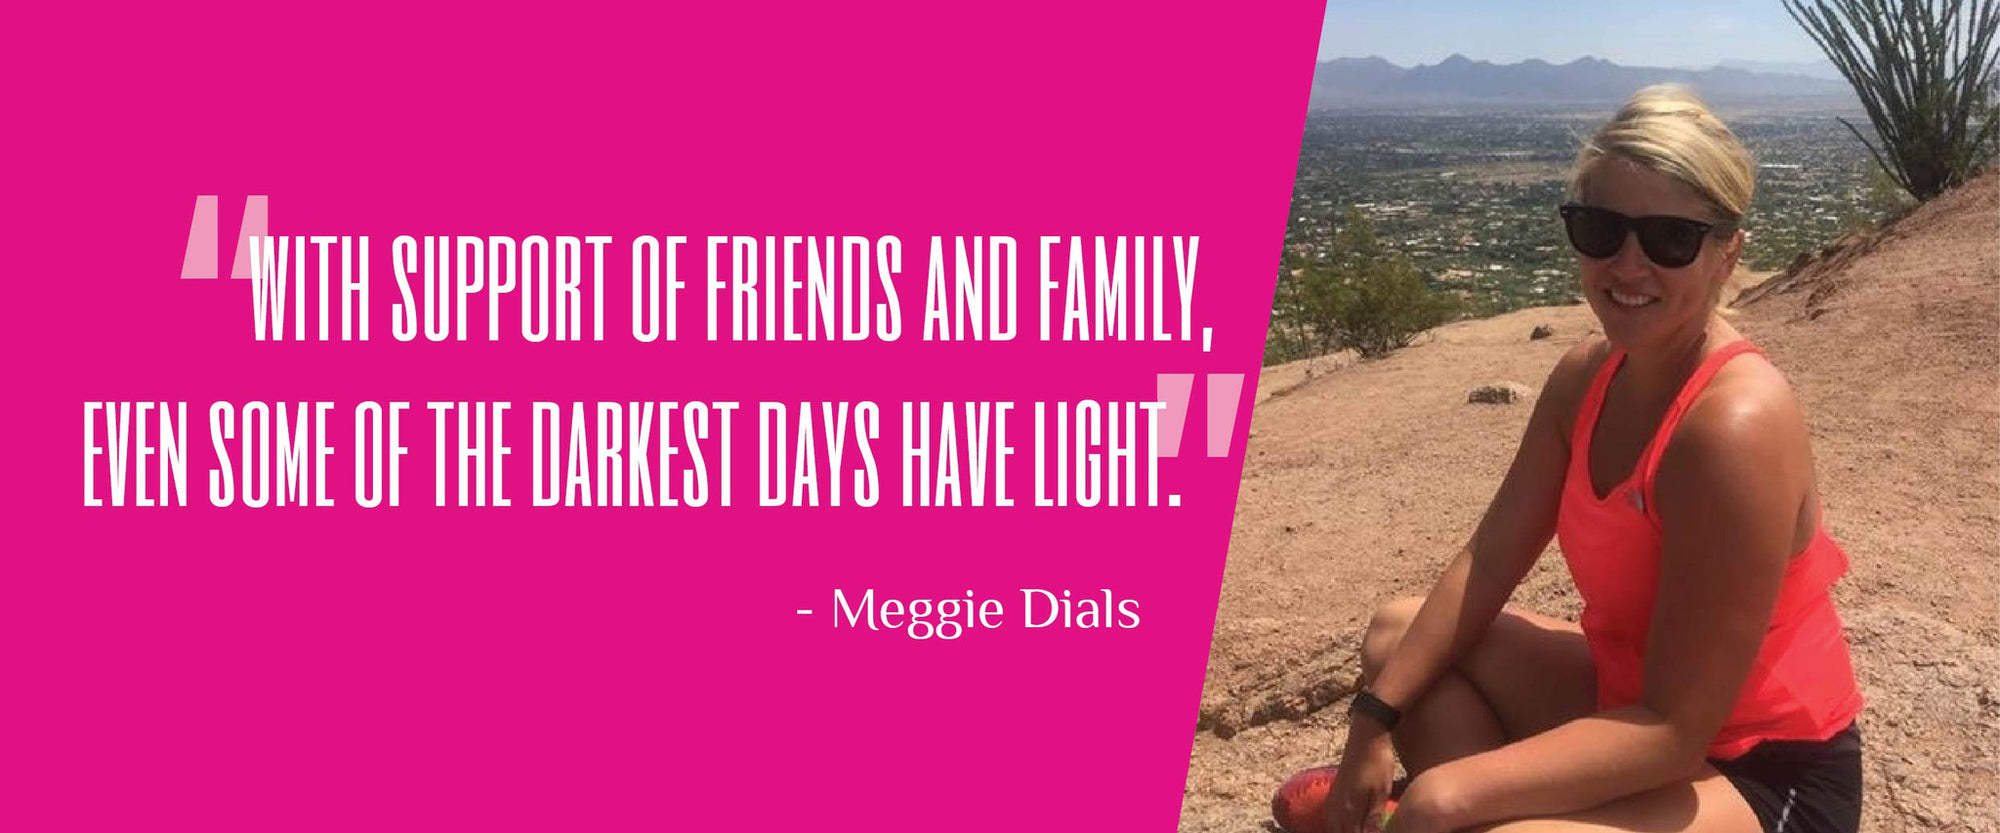 Empowering Women: Meggie Dials